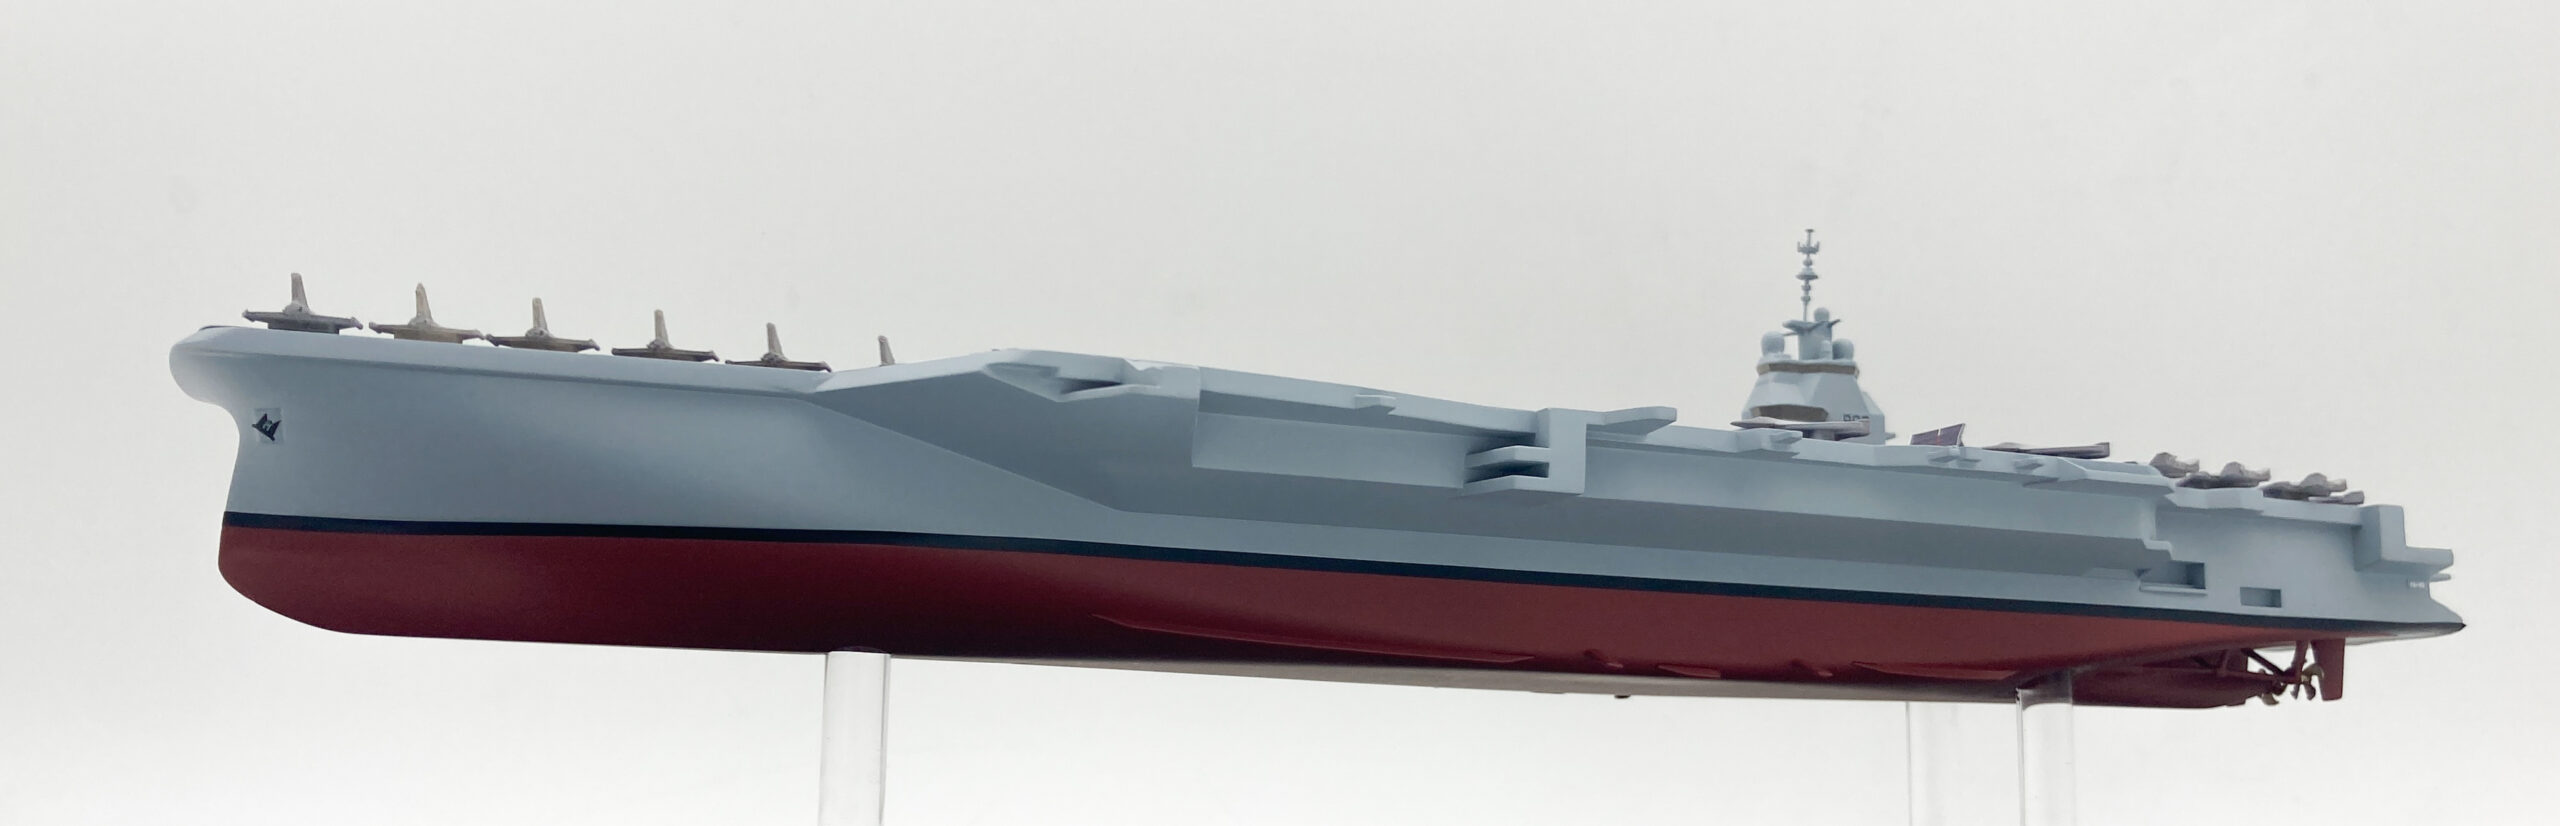 maquette bateau porte avion - Atelier Pras